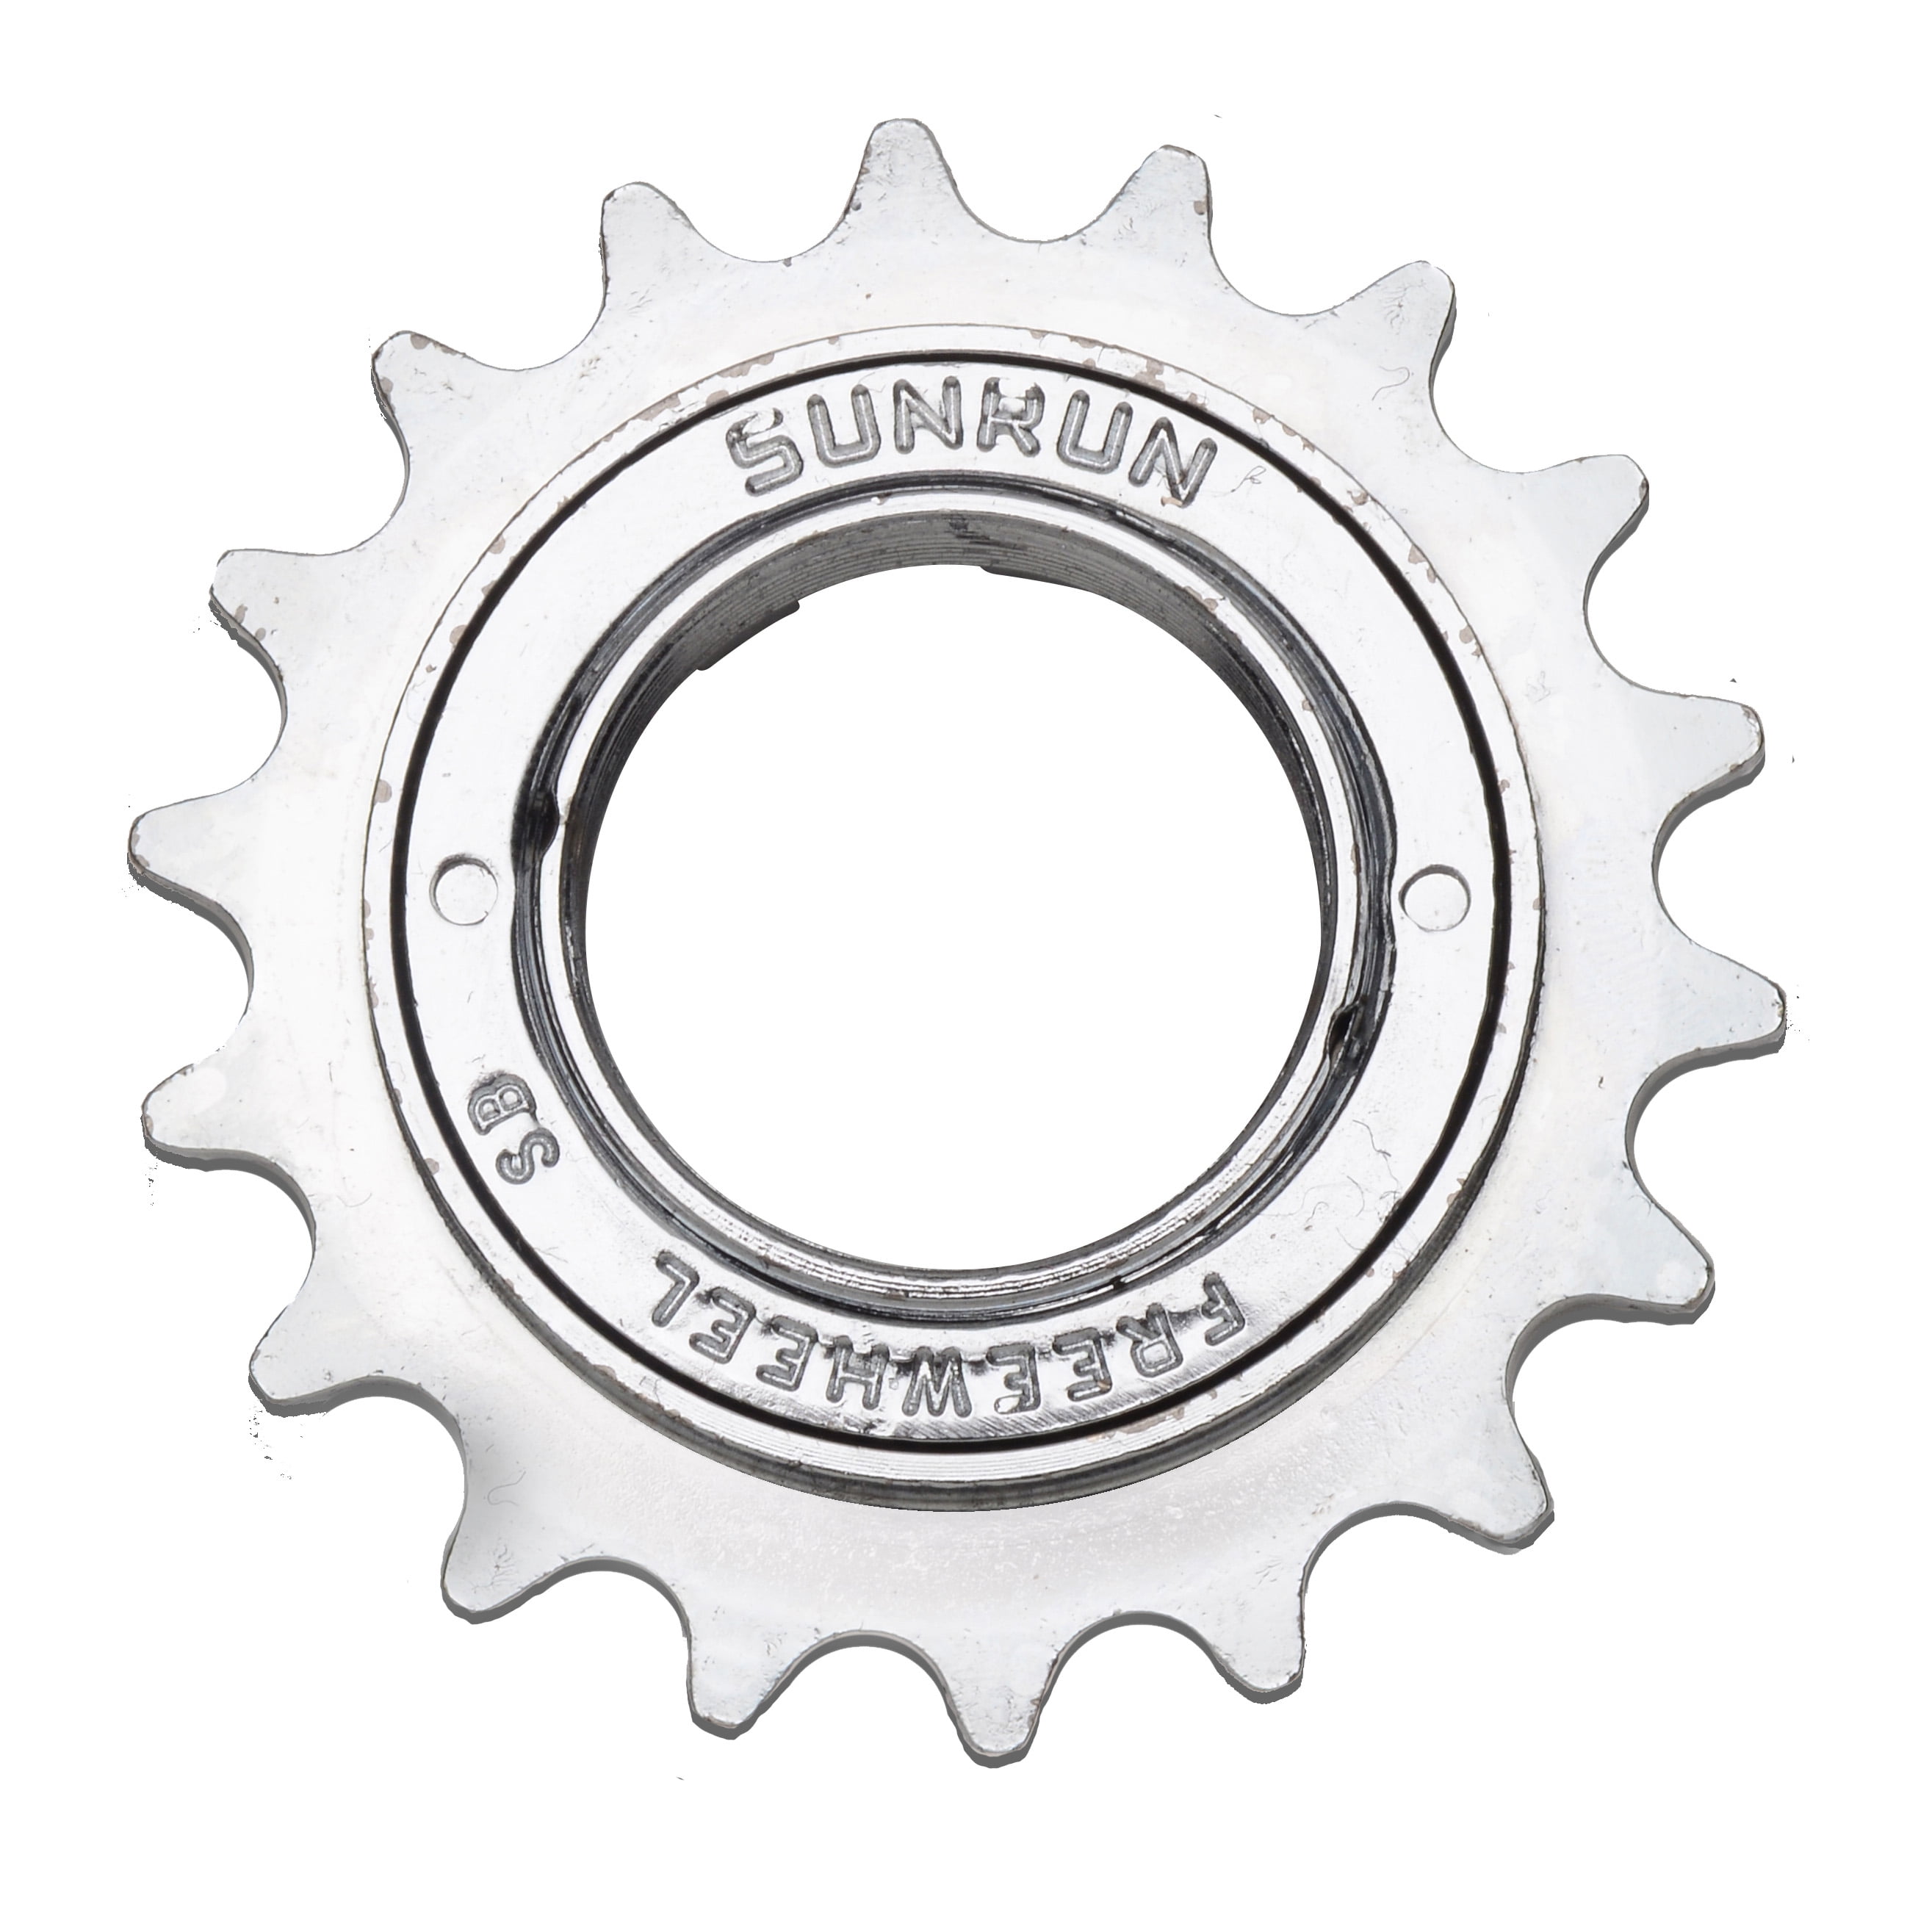 sunrun gear shifter review